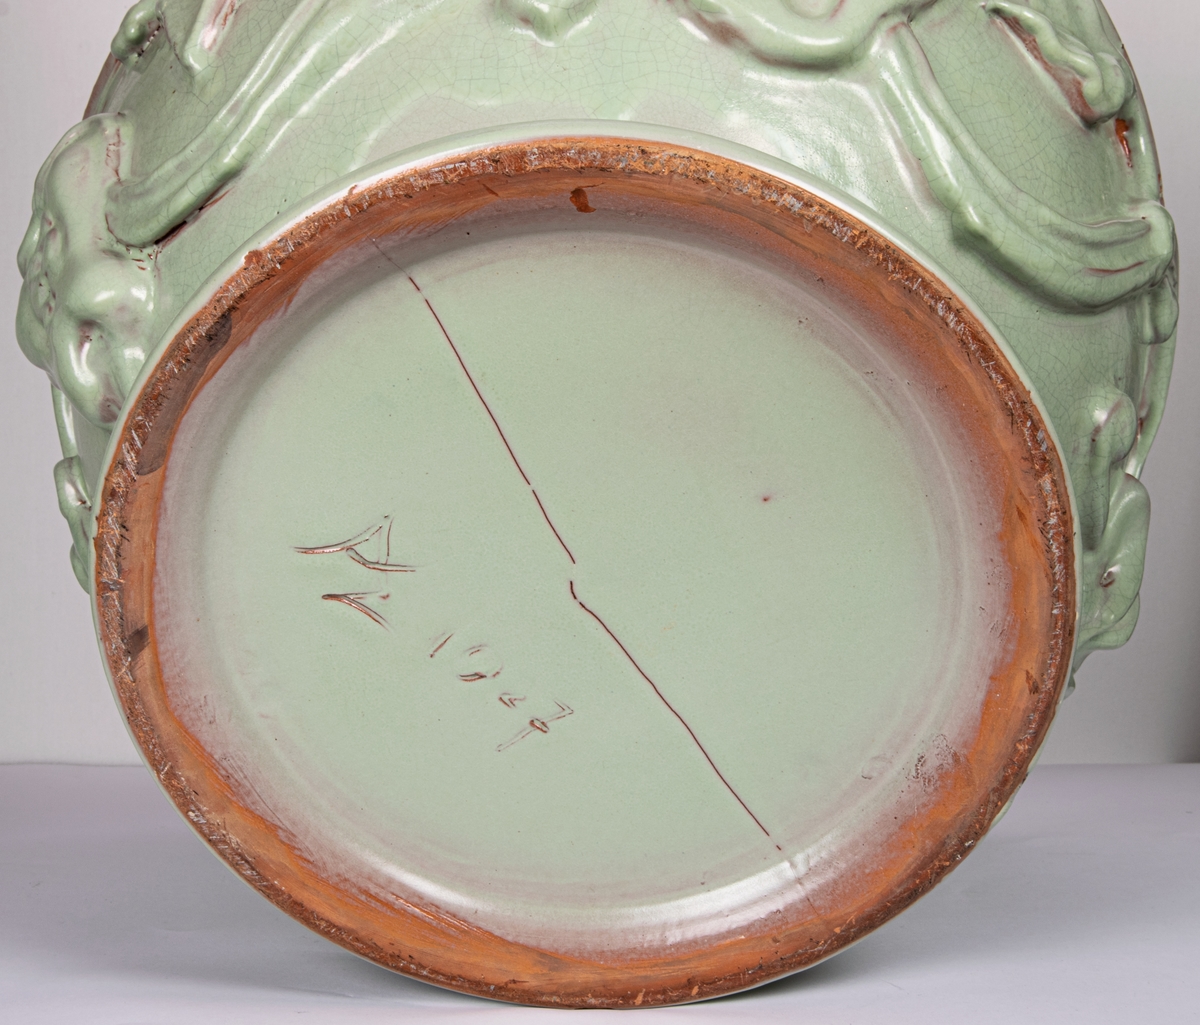 Terrasskruka, Bo Fajans, design Allan Ebeling. Dekor i relief med bladornament, gulgrön krackelglasyr.